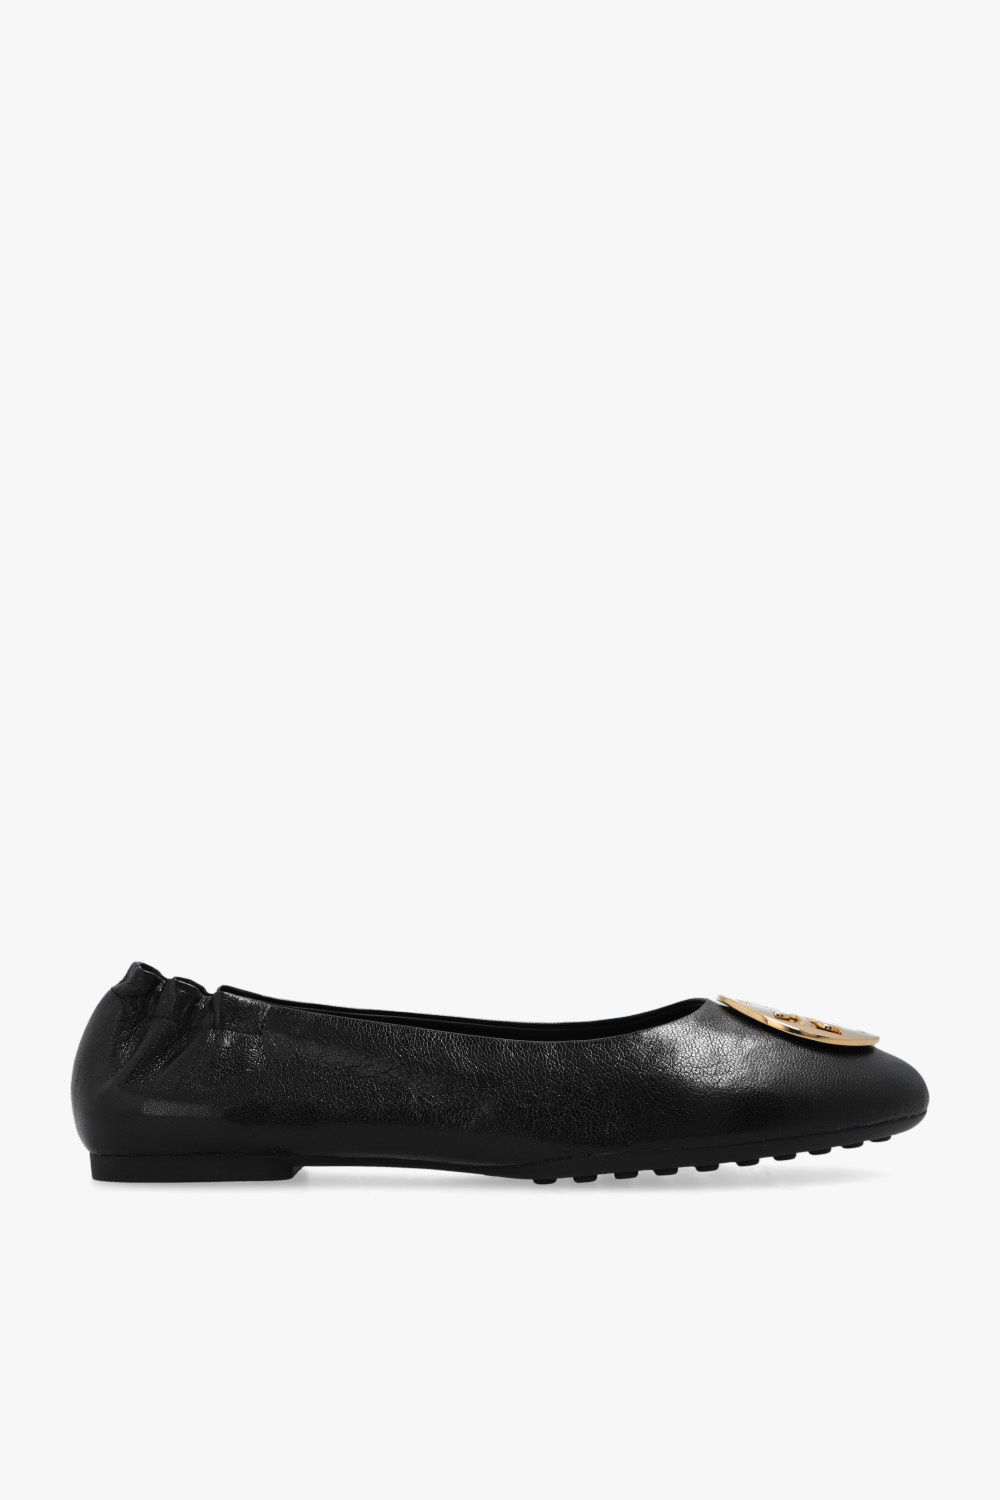 Tory Burch 'Claire' leather ballet flats | Women's Shoes | Vitkac